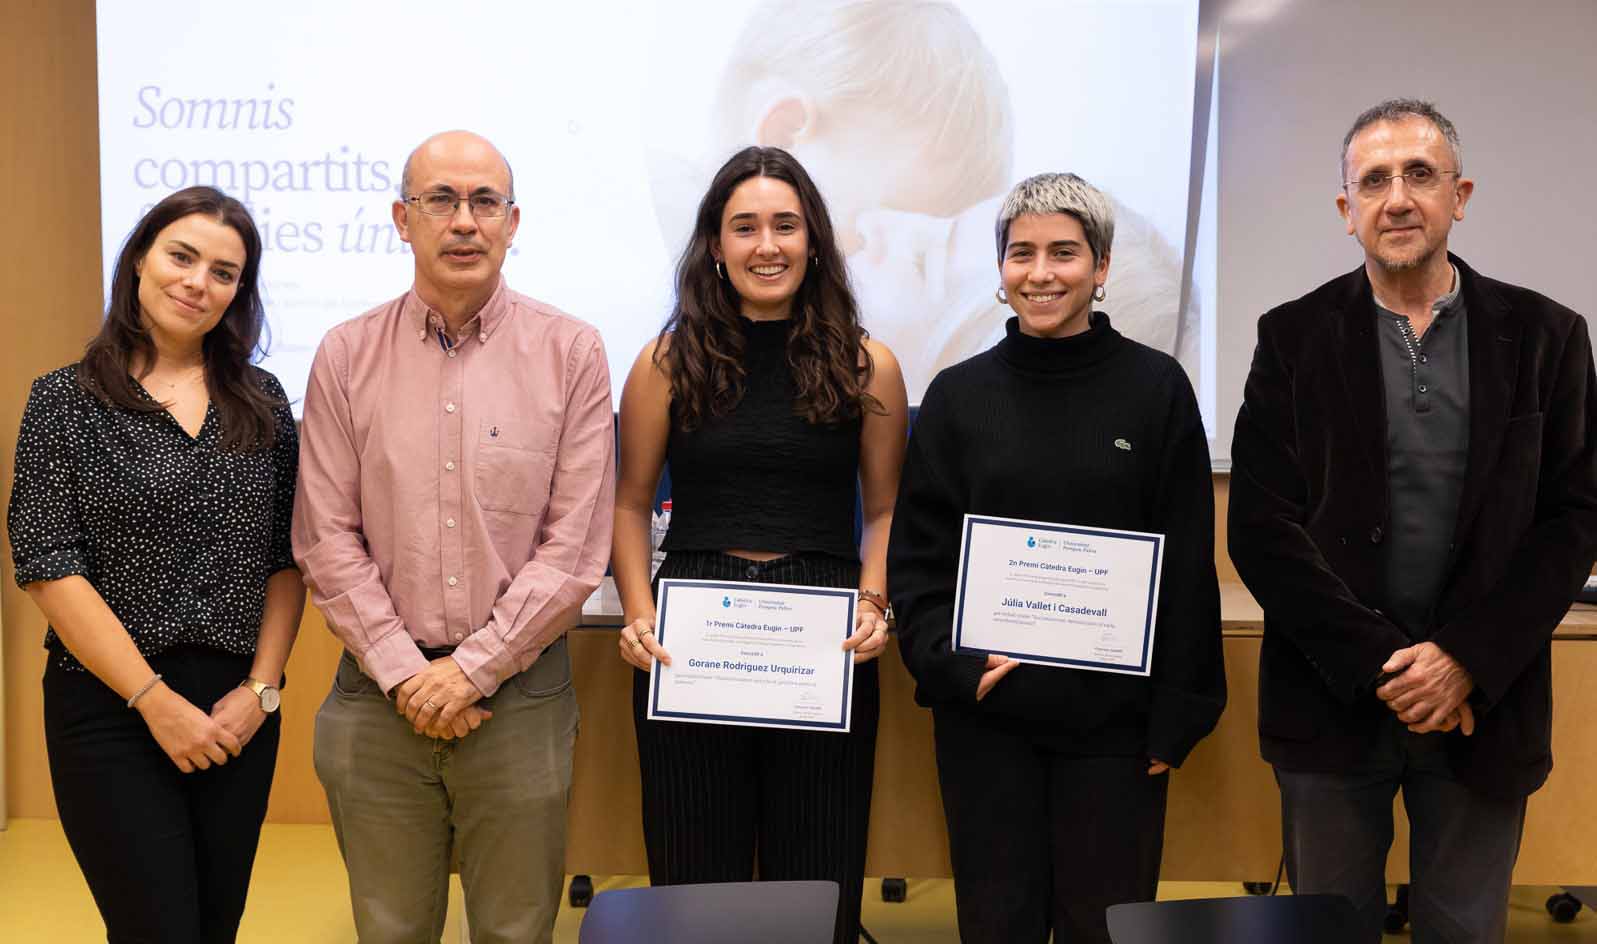 Gorane Rodriguez receives award for best TFG thesis